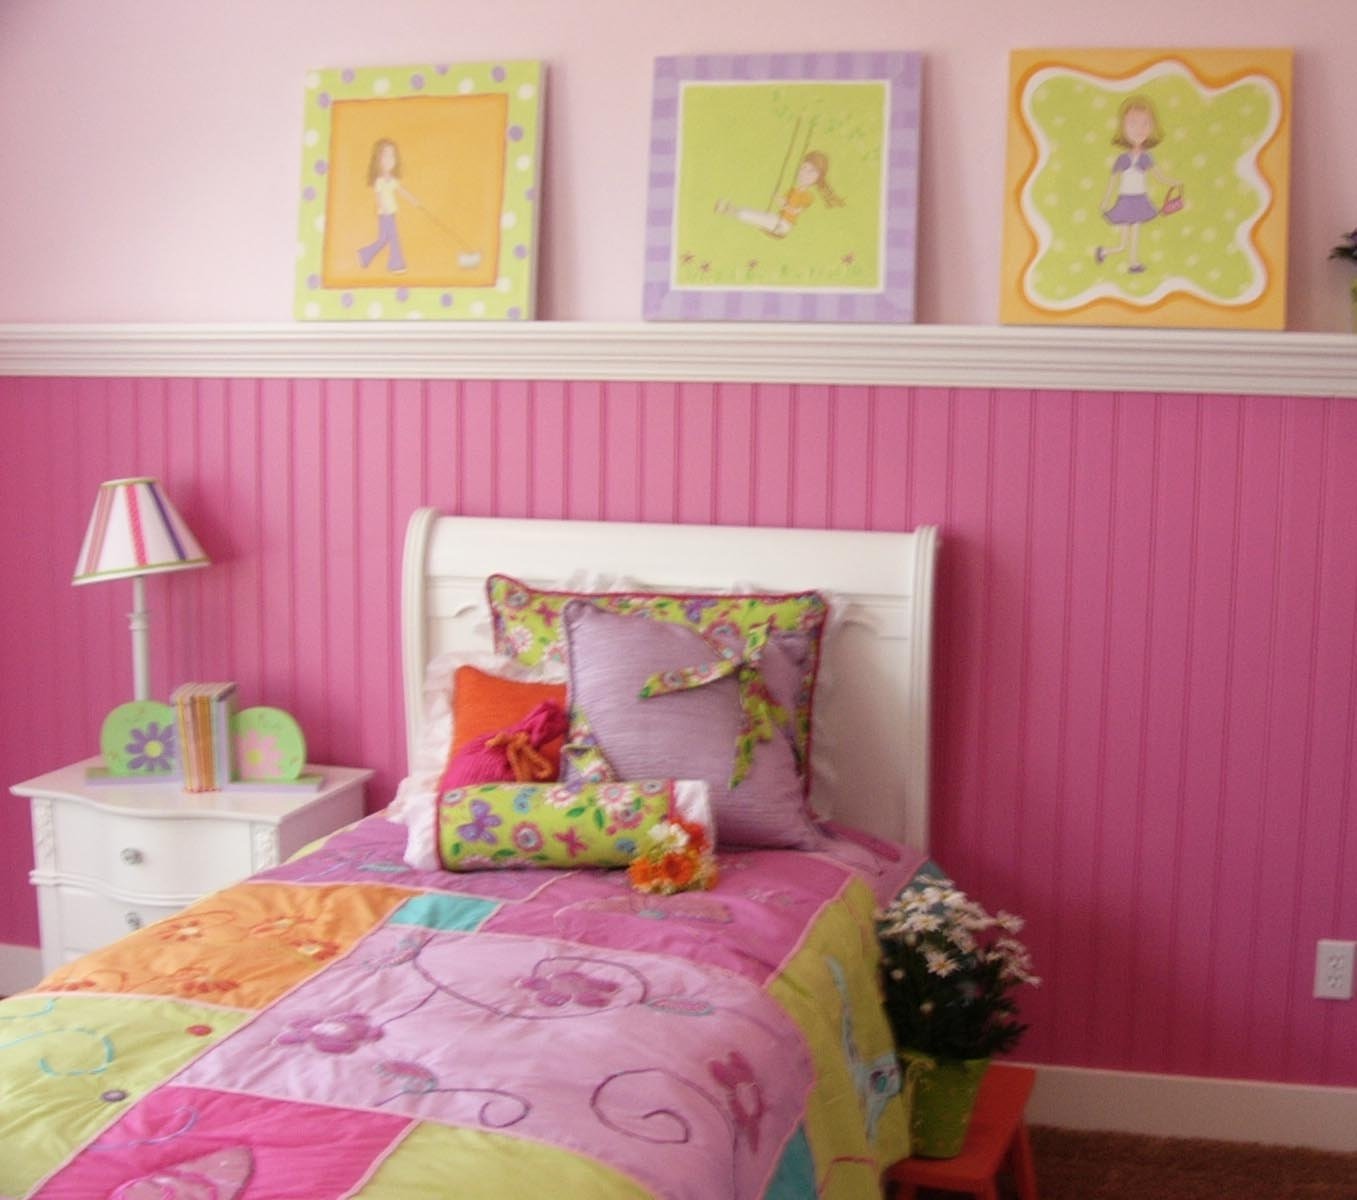 10 Wonderful Little Girl Room Decorating Ideas pictures of girls rooms decorating ideas 2022